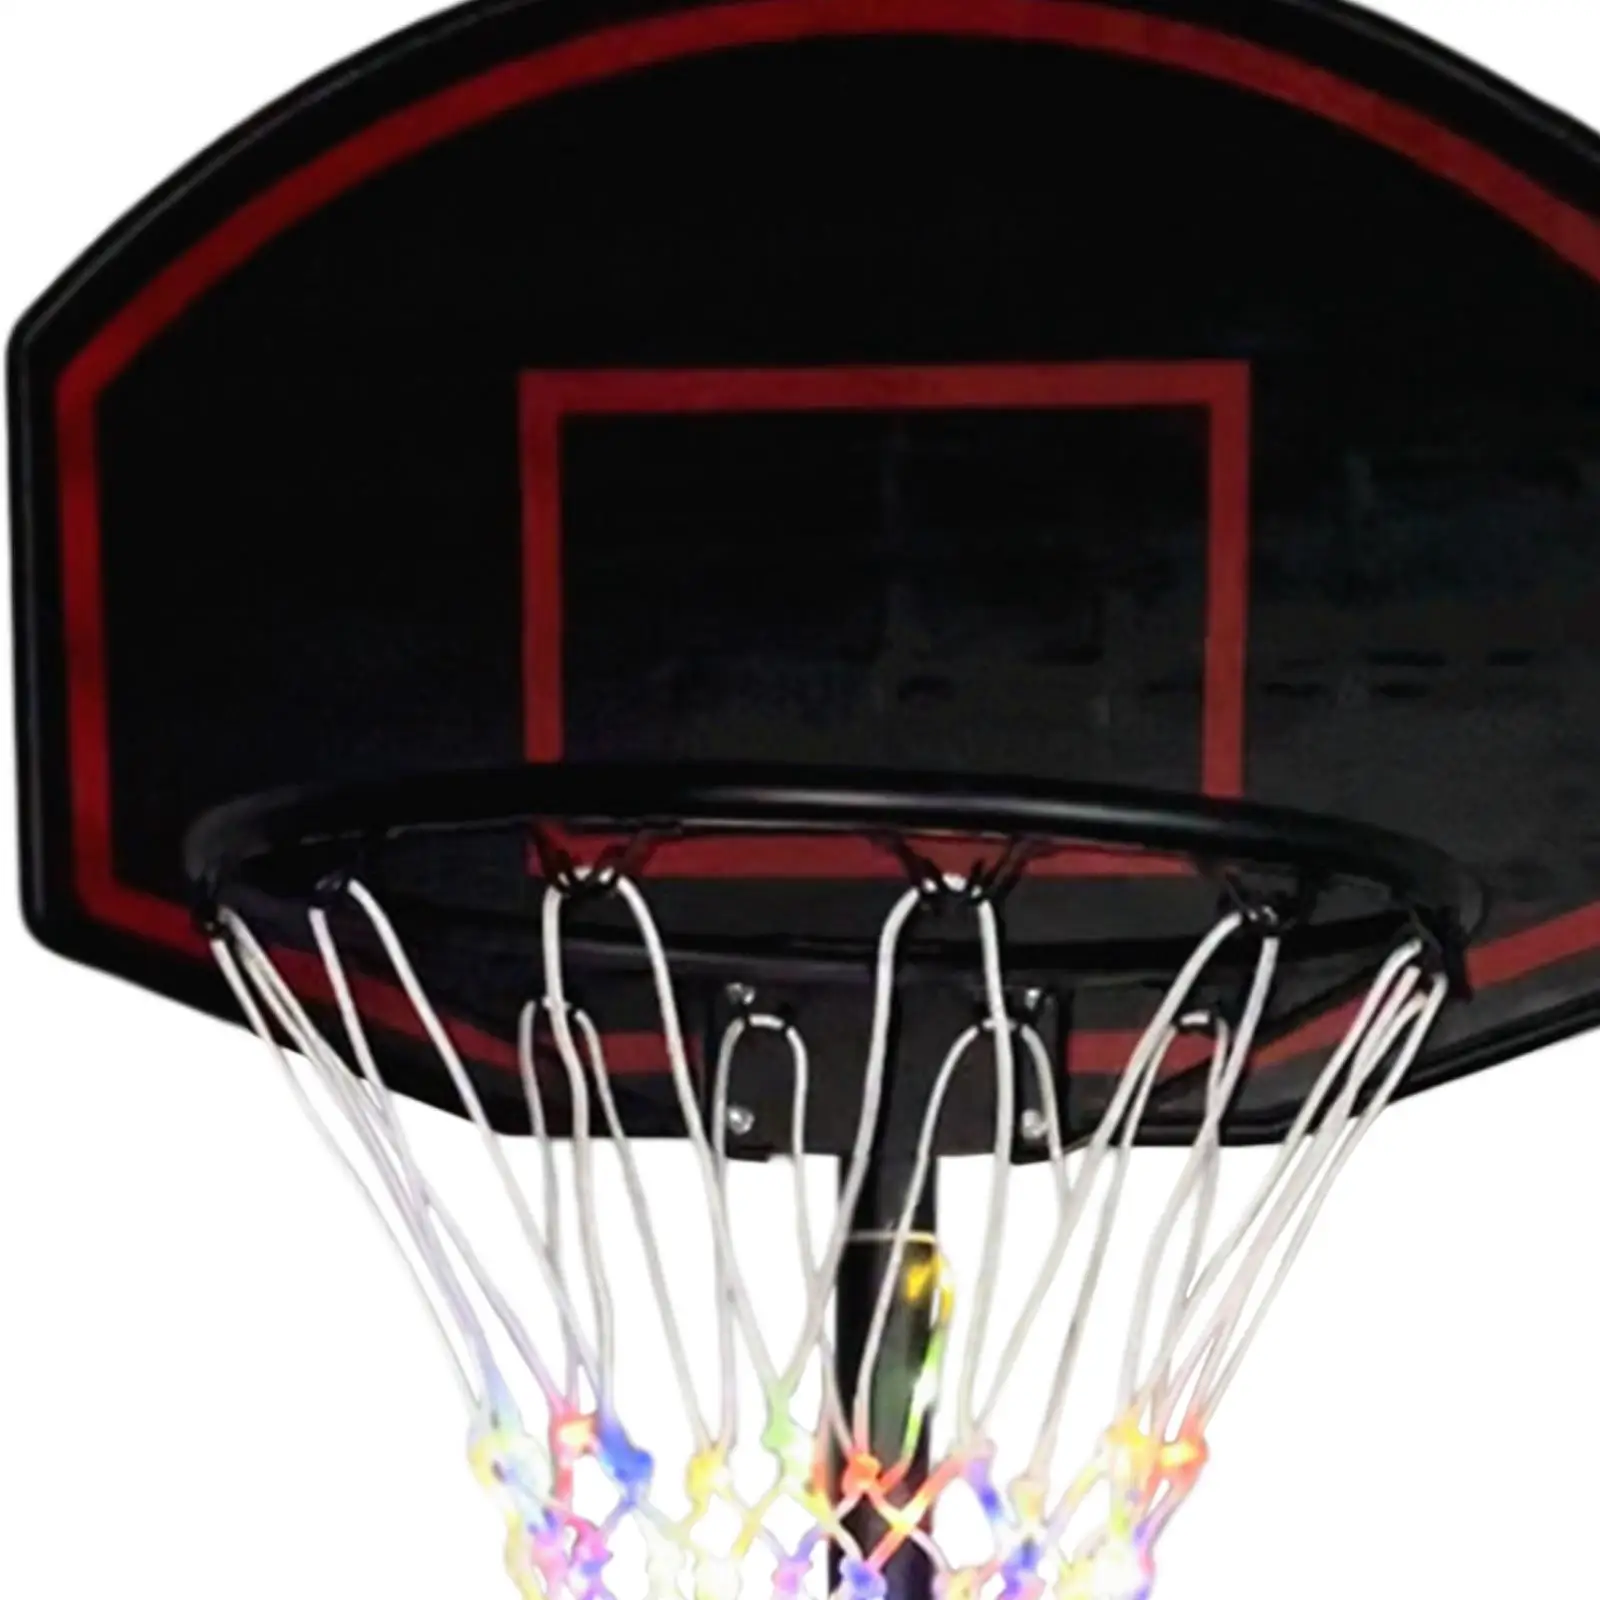 Luminous Outdoor Nylon Hoop Net Waterproof Glow in The Dark Basketball Net Basketball Rim LED Light for backyard